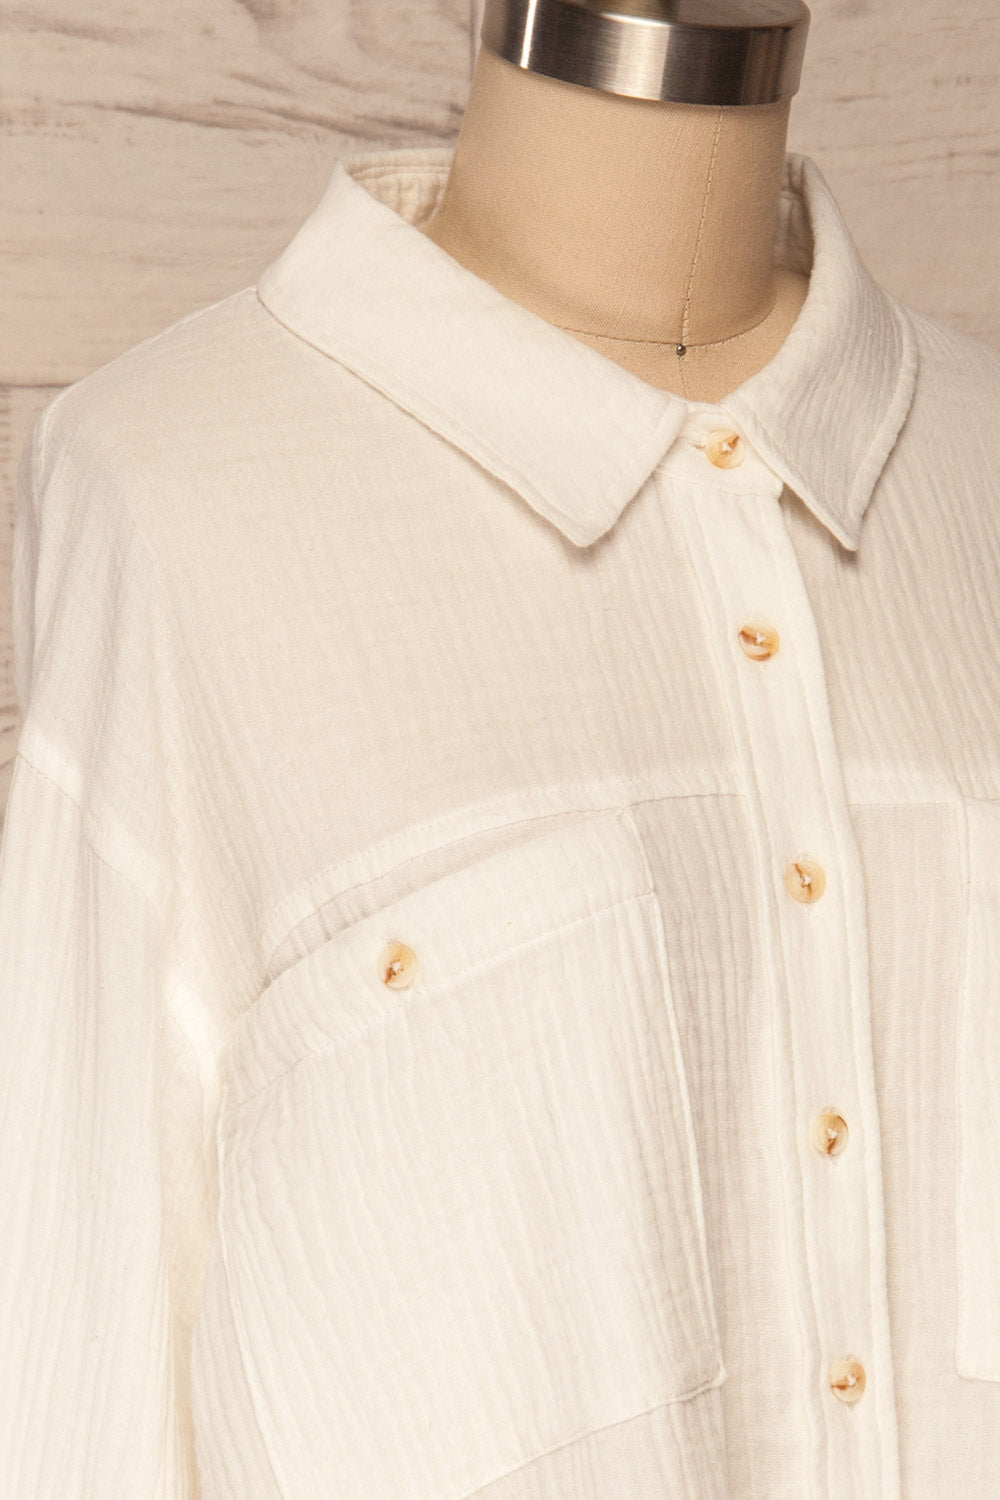 Eggesvik White Textured Button-Up Shirt | La petite garçonne  side close up